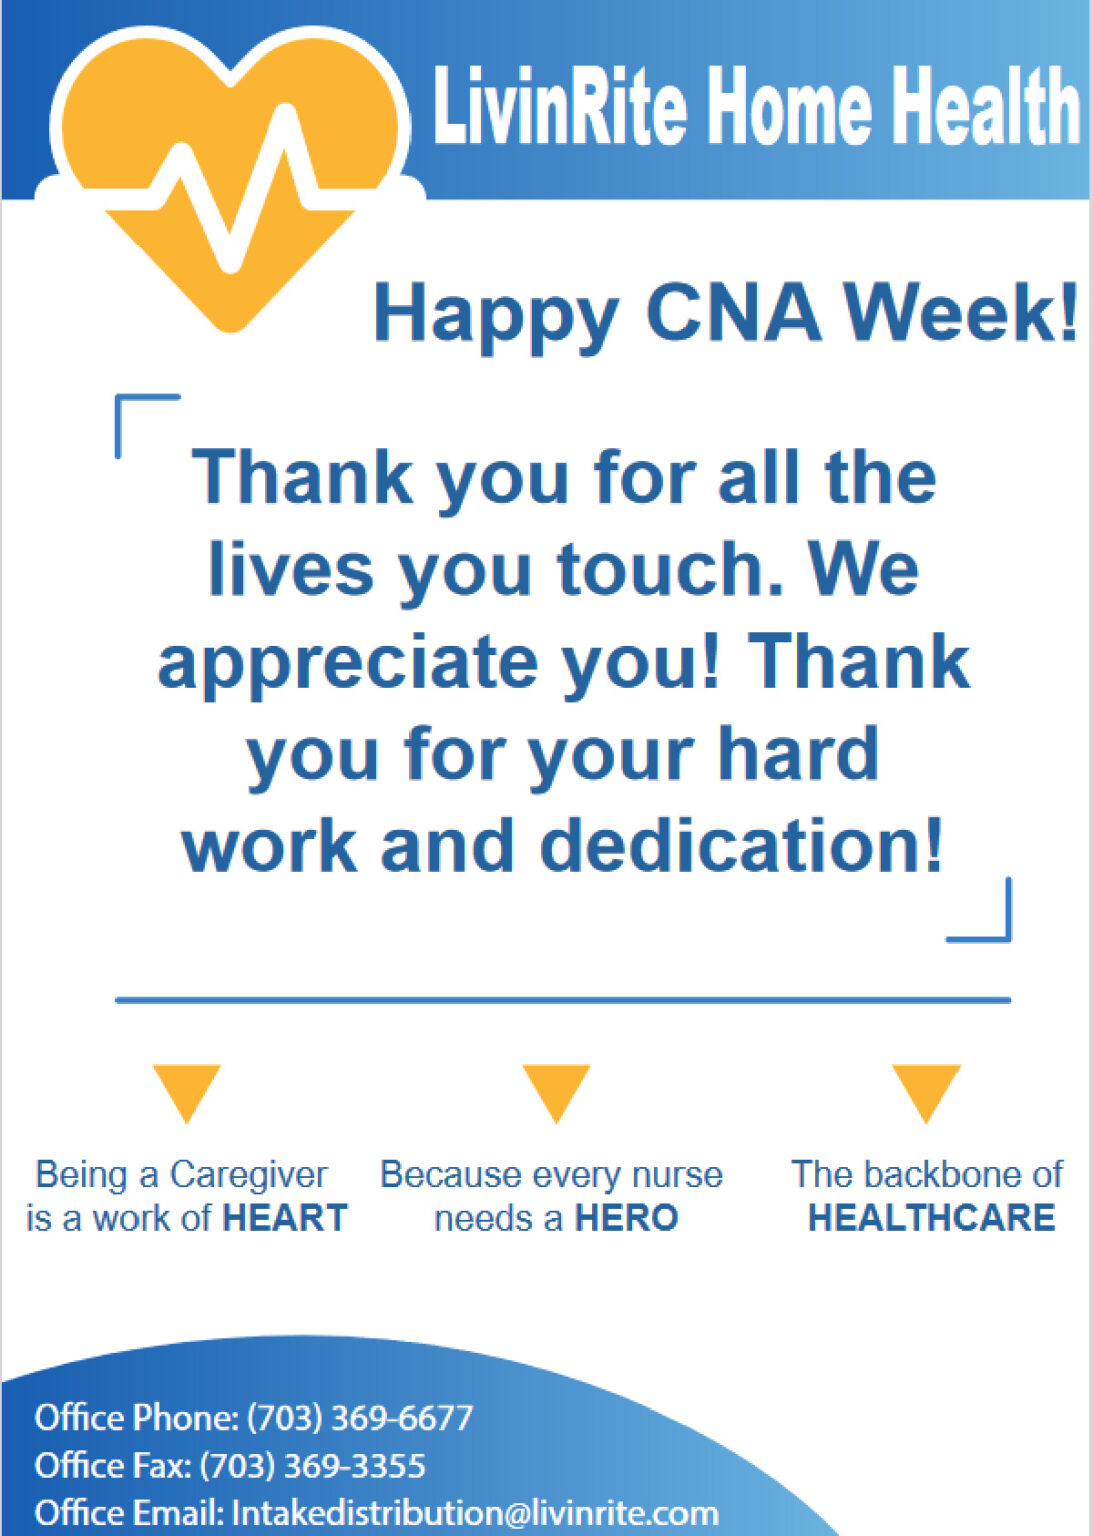 Happy CNA Week! LivinRite Home Health Serving Northern Virginia